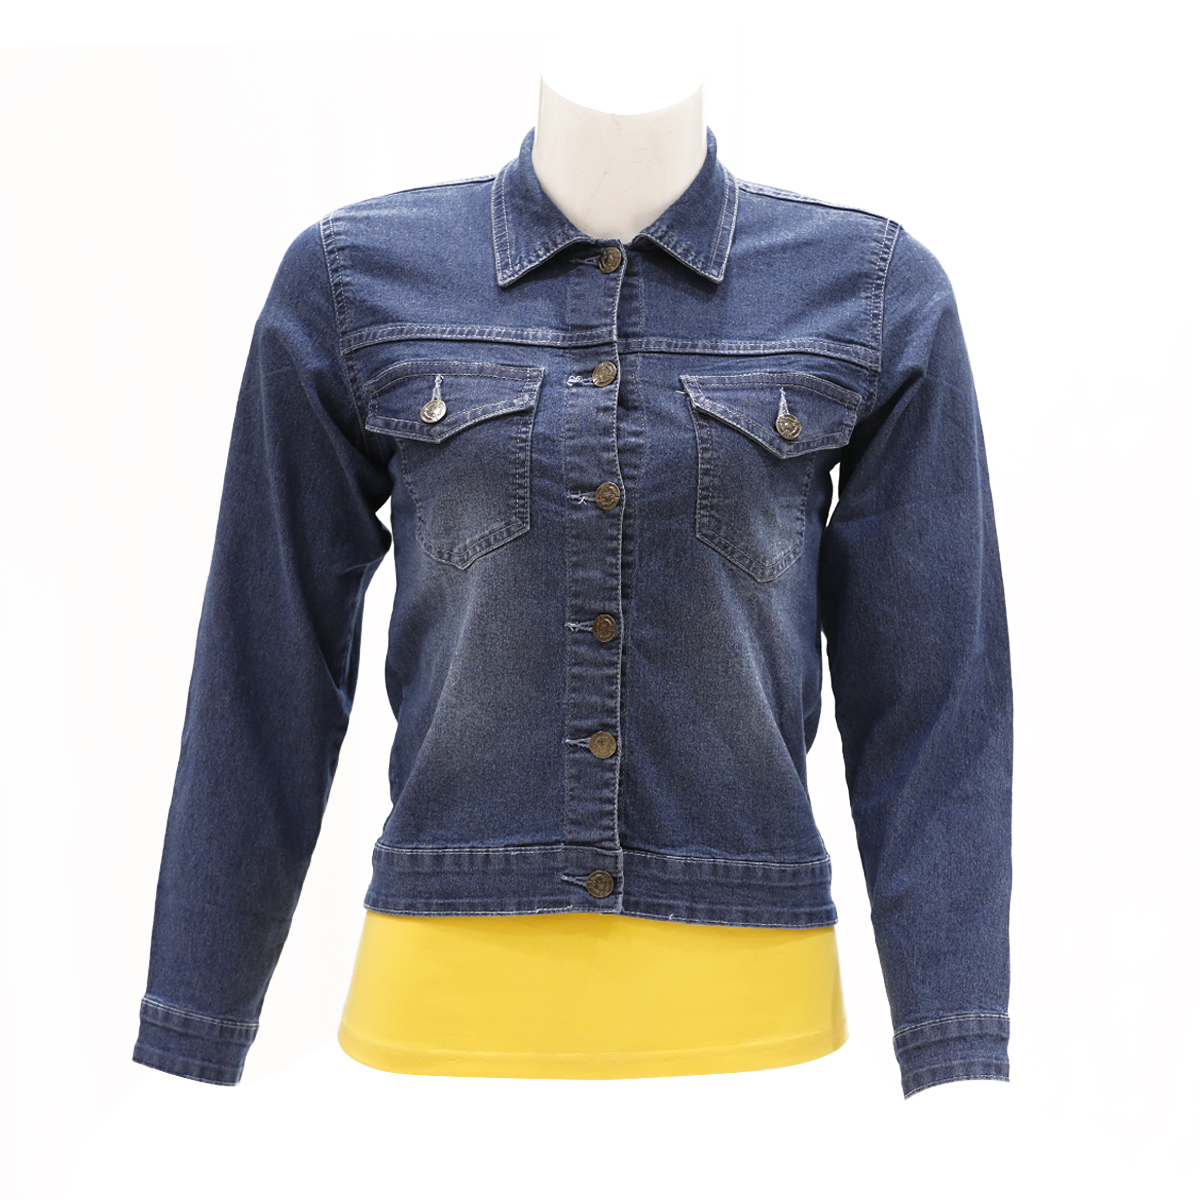 Zola Full Sleeve Denim Jacket Styled With 2 Patch Pockets - Stone/Mid Blue, Size-Xl